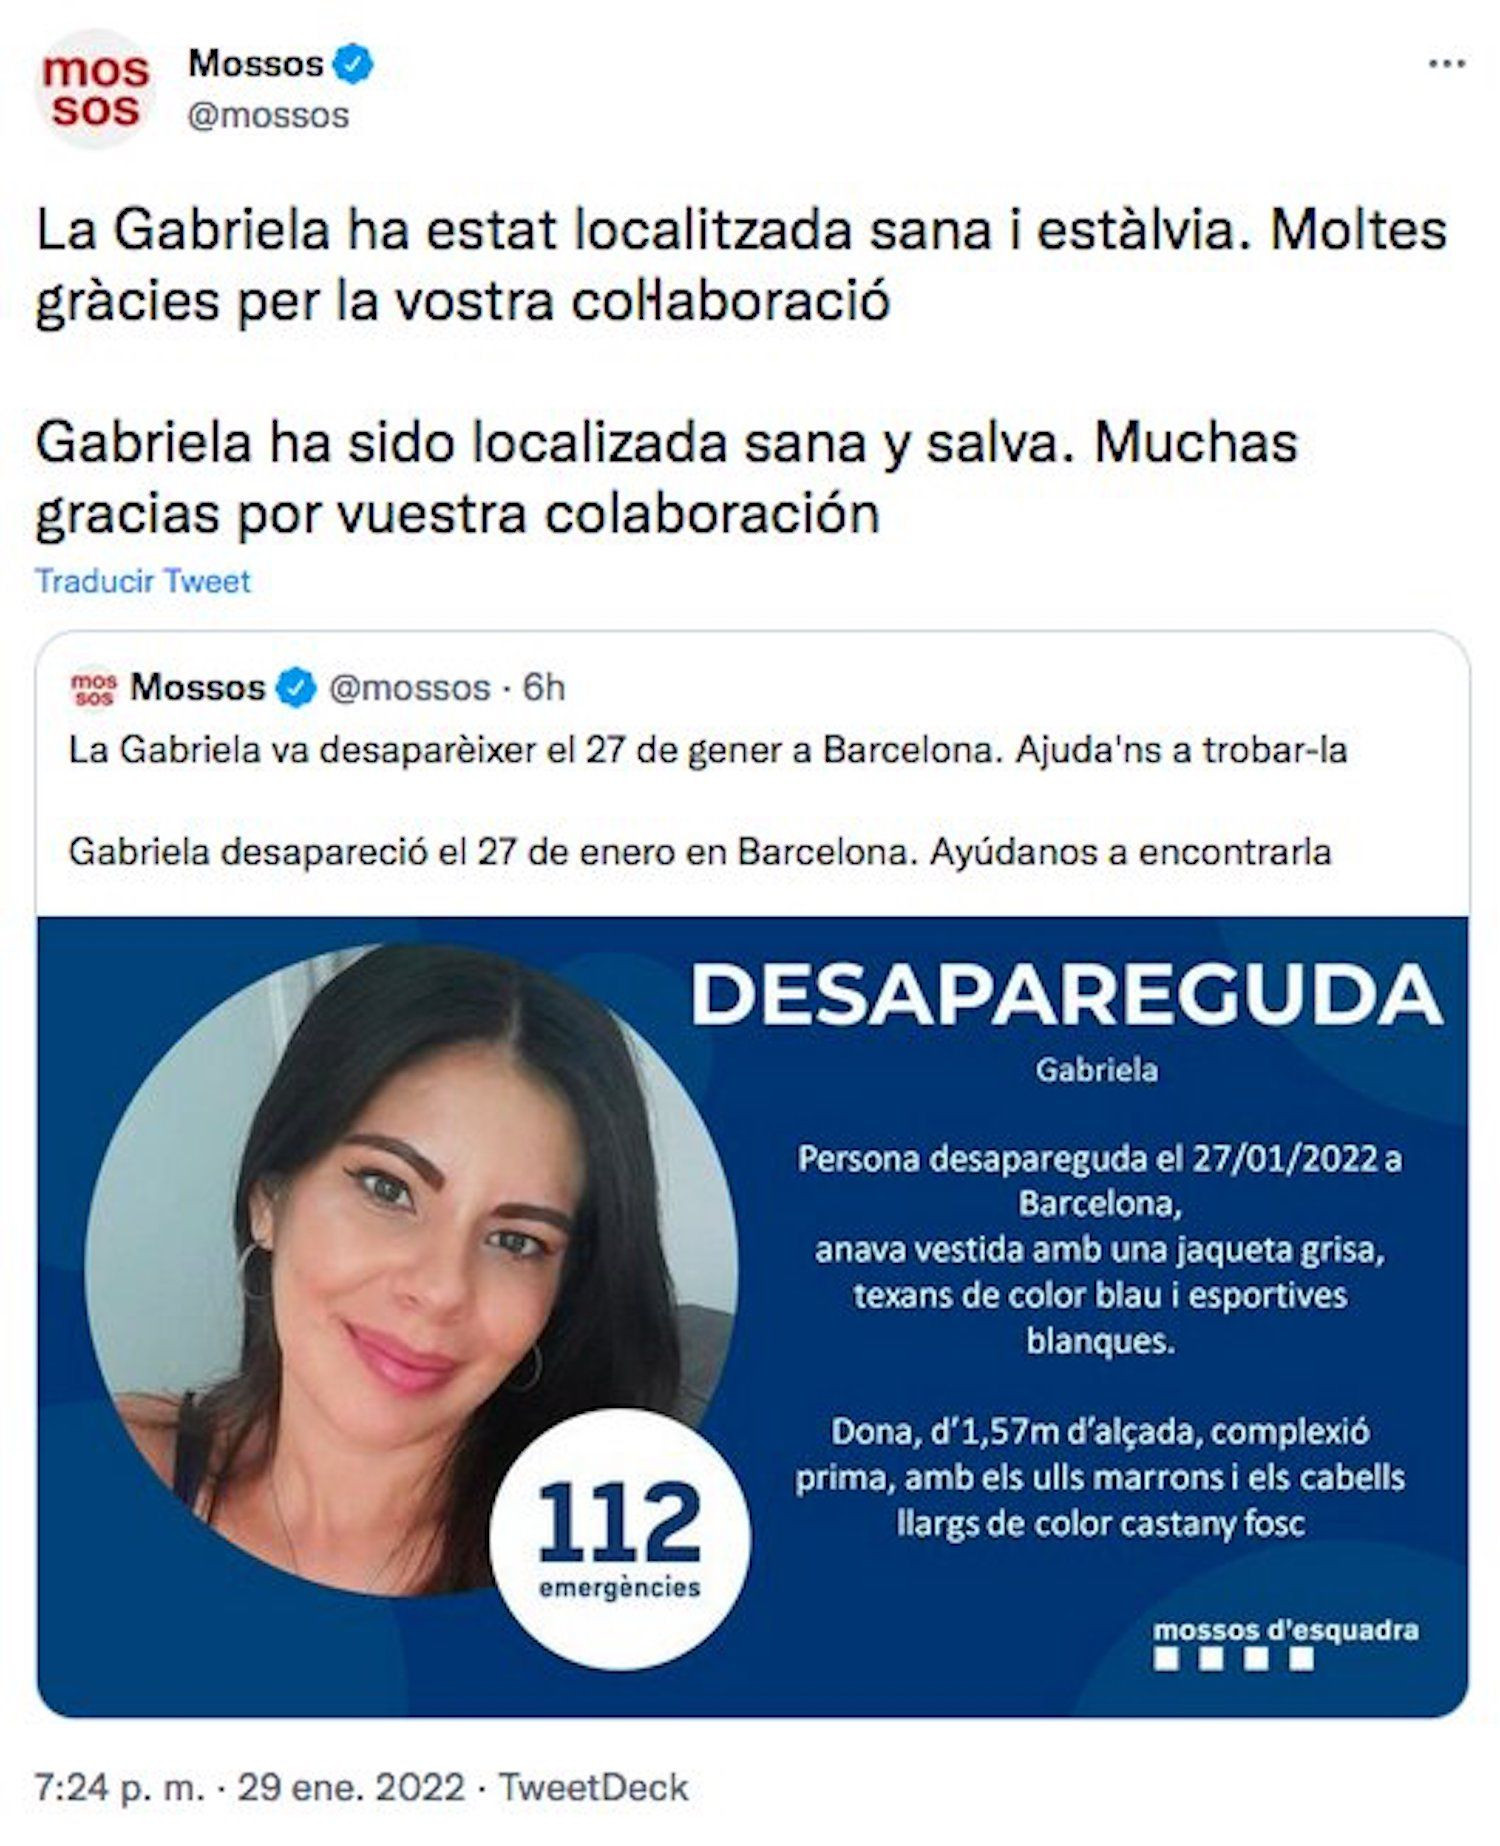 Tuit de los Mossos d'Esquadra tras localizar a Gabriela / REDES SOCIALES